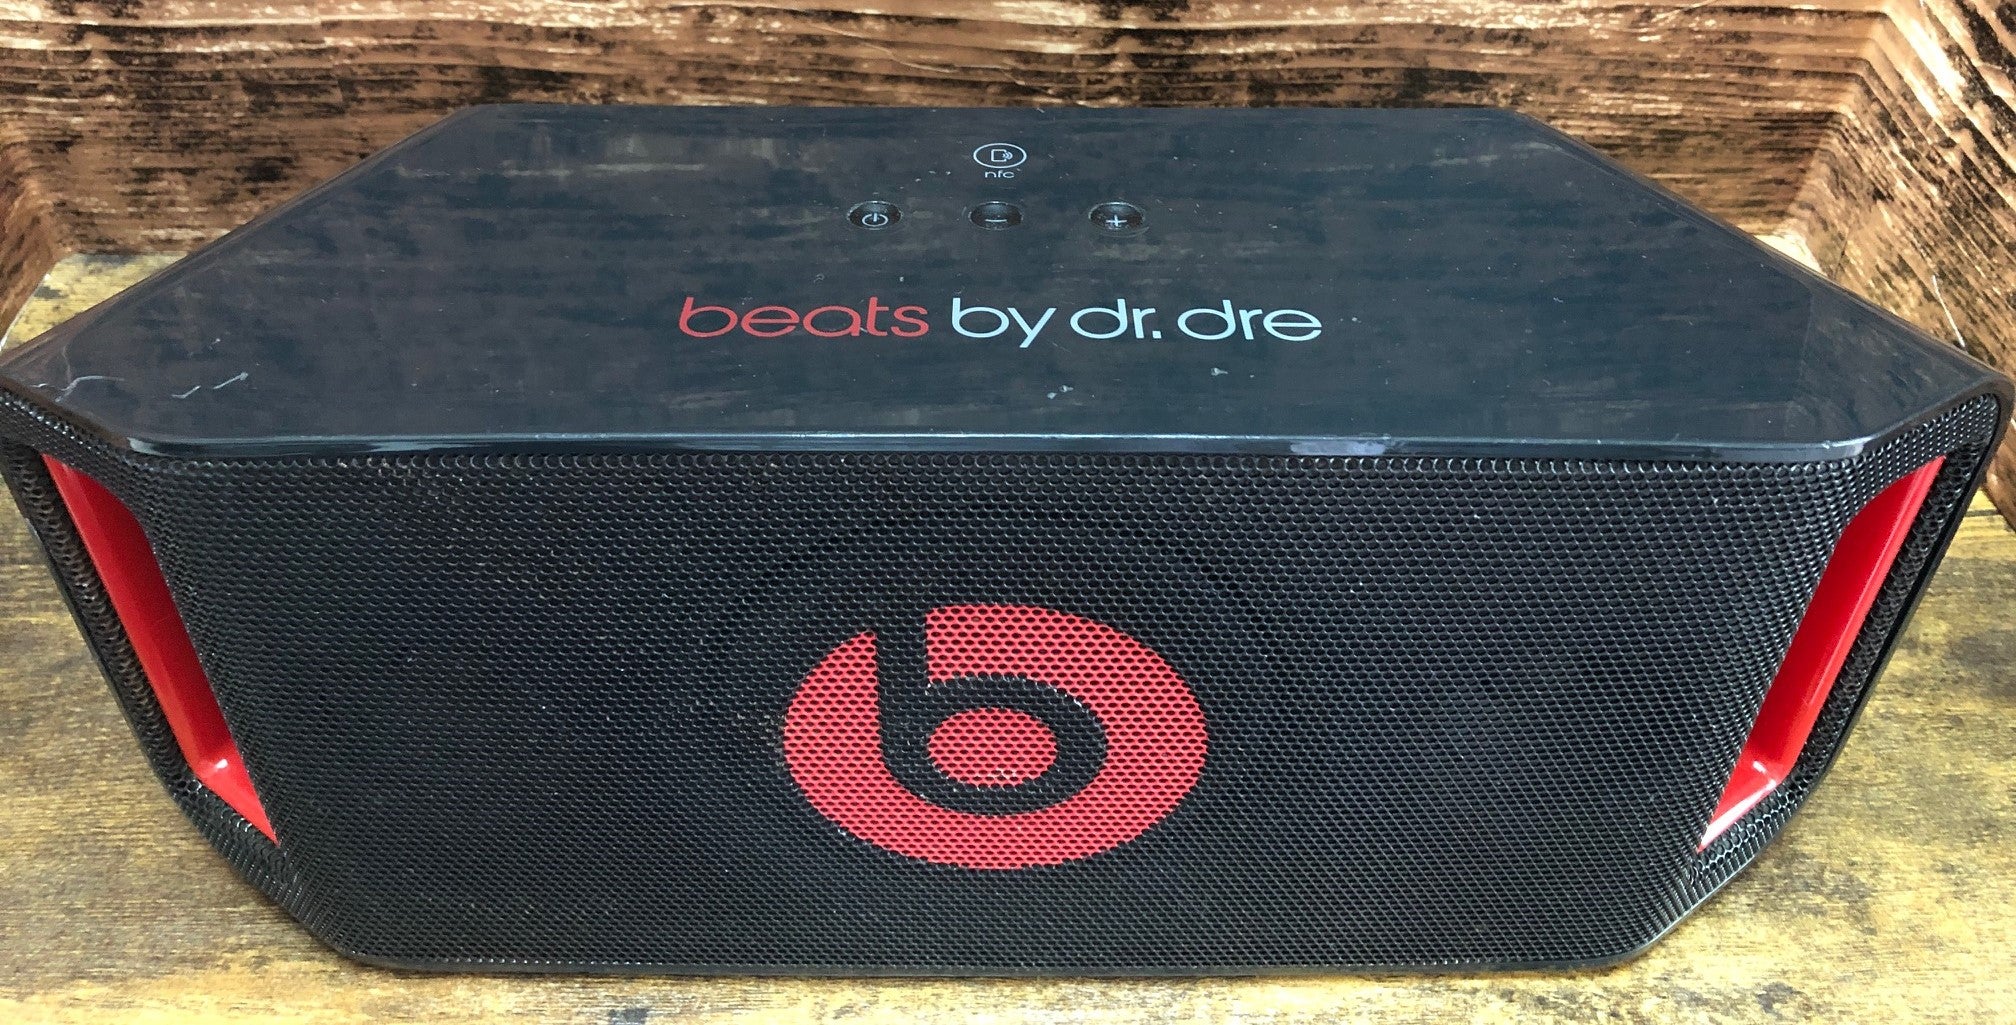 Beatbox Portable（beats by dr.dre） | Bluetoothに魅せられた男のブログ